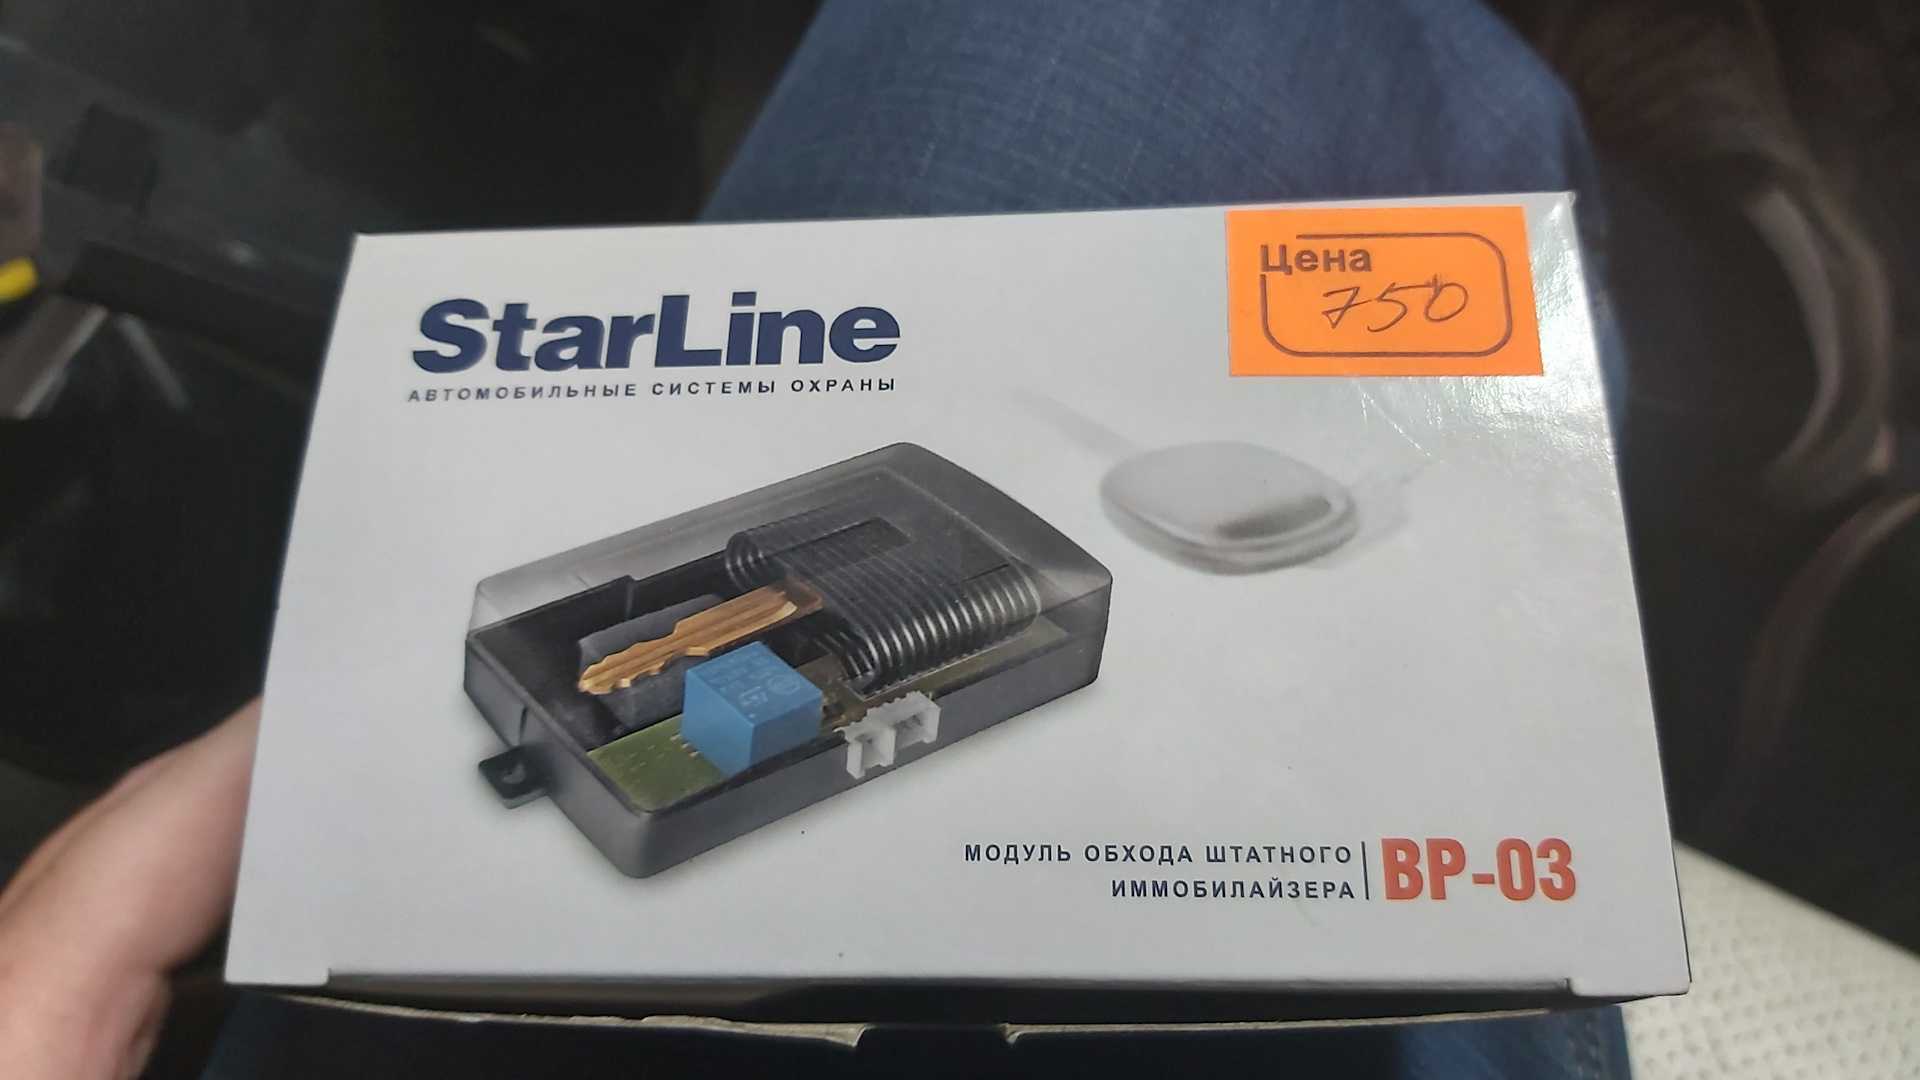 Starline a93 иммобилайзер. Старлайн а91 модуль обхода иммобилайзера. Модуль обхода иммобилайзера STARLINE BP-03. Модуль обхода иммобилайзера STARLINE a93. Модуль обхода штатного иммобилайзера STARLINE.